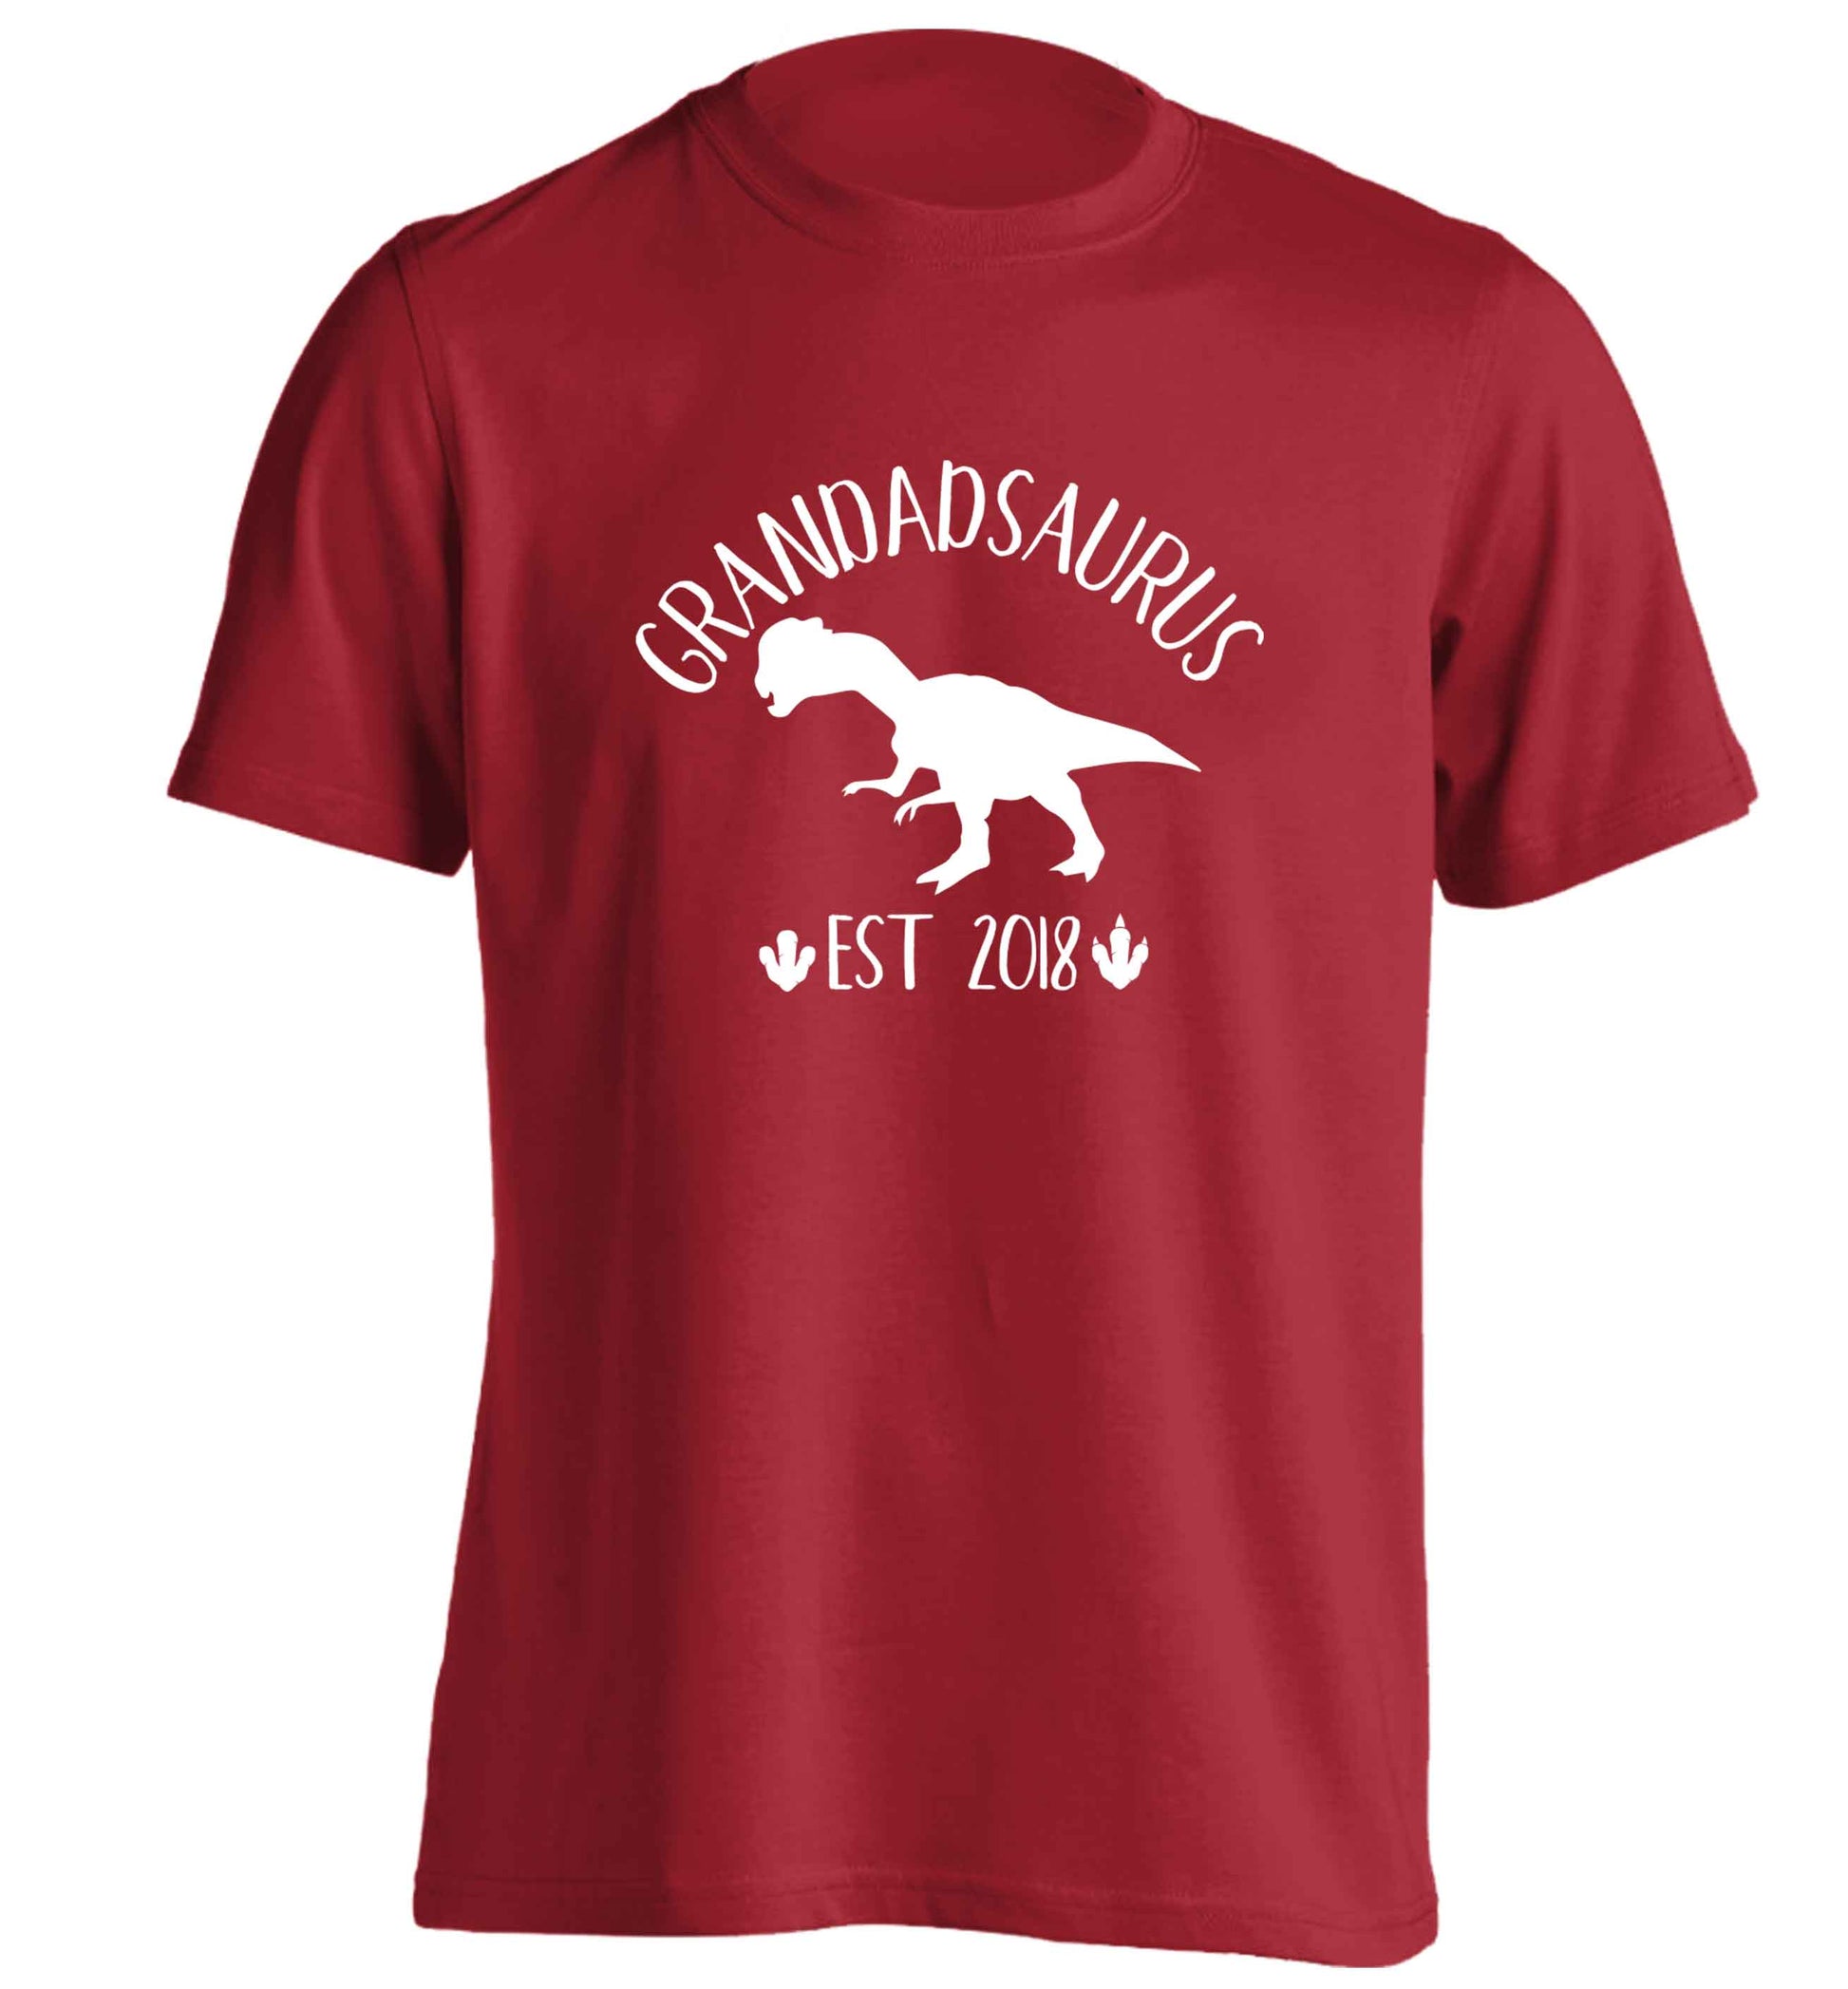 Personalised grandadsaurus since (custom date) adults unisex red Tshirt 2XL